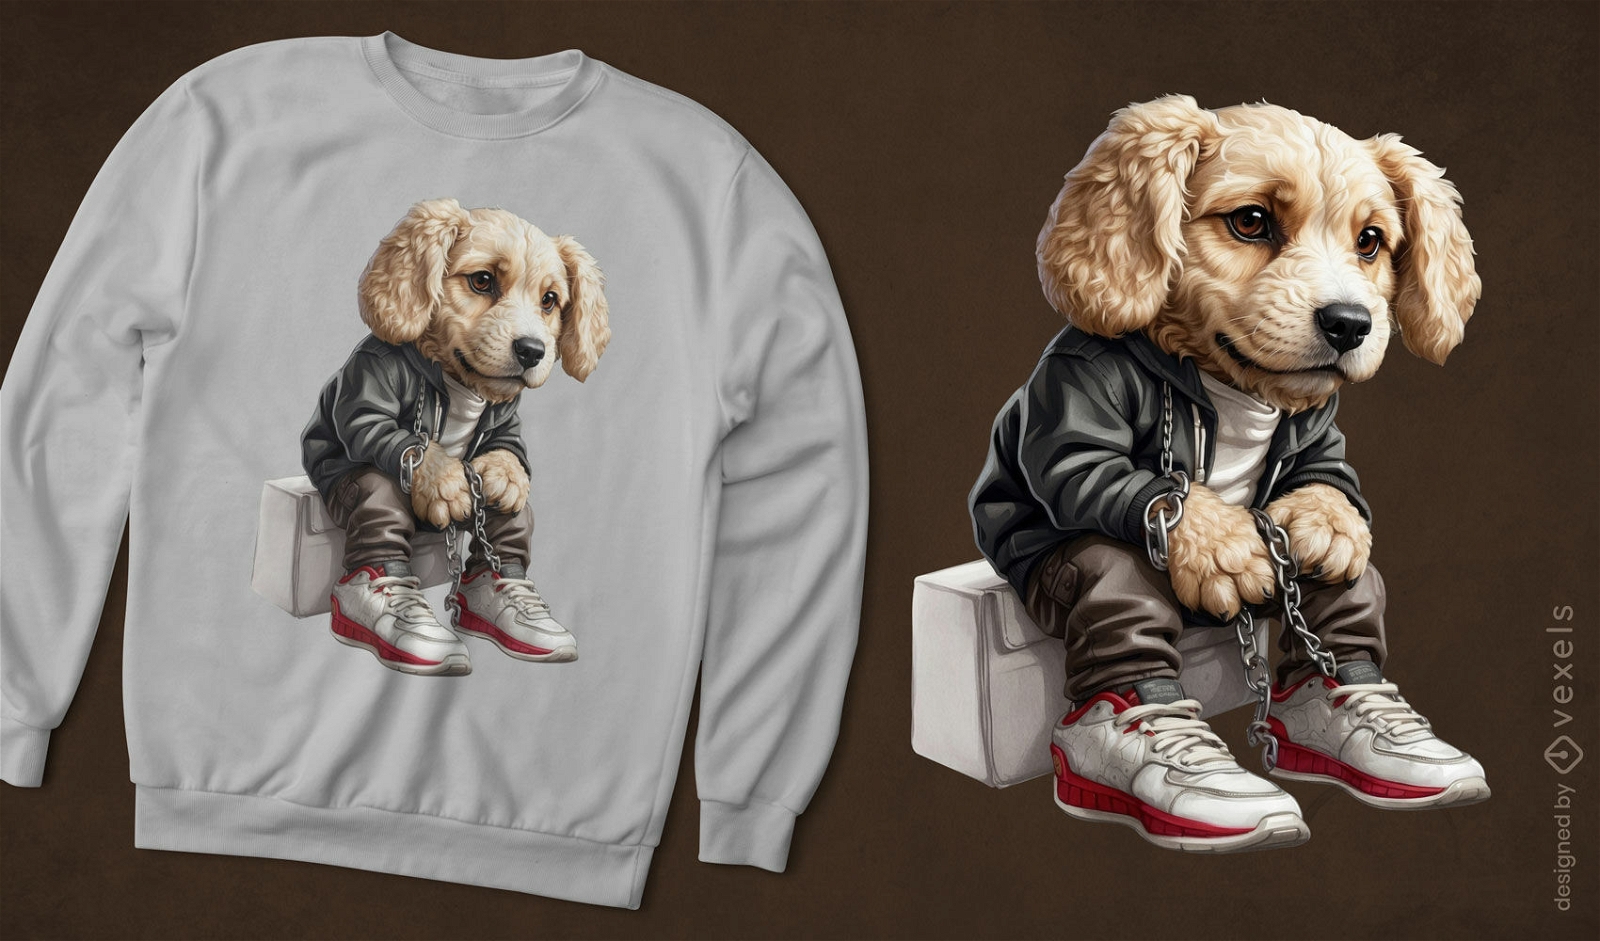 Dog in urban attire t-shirt design